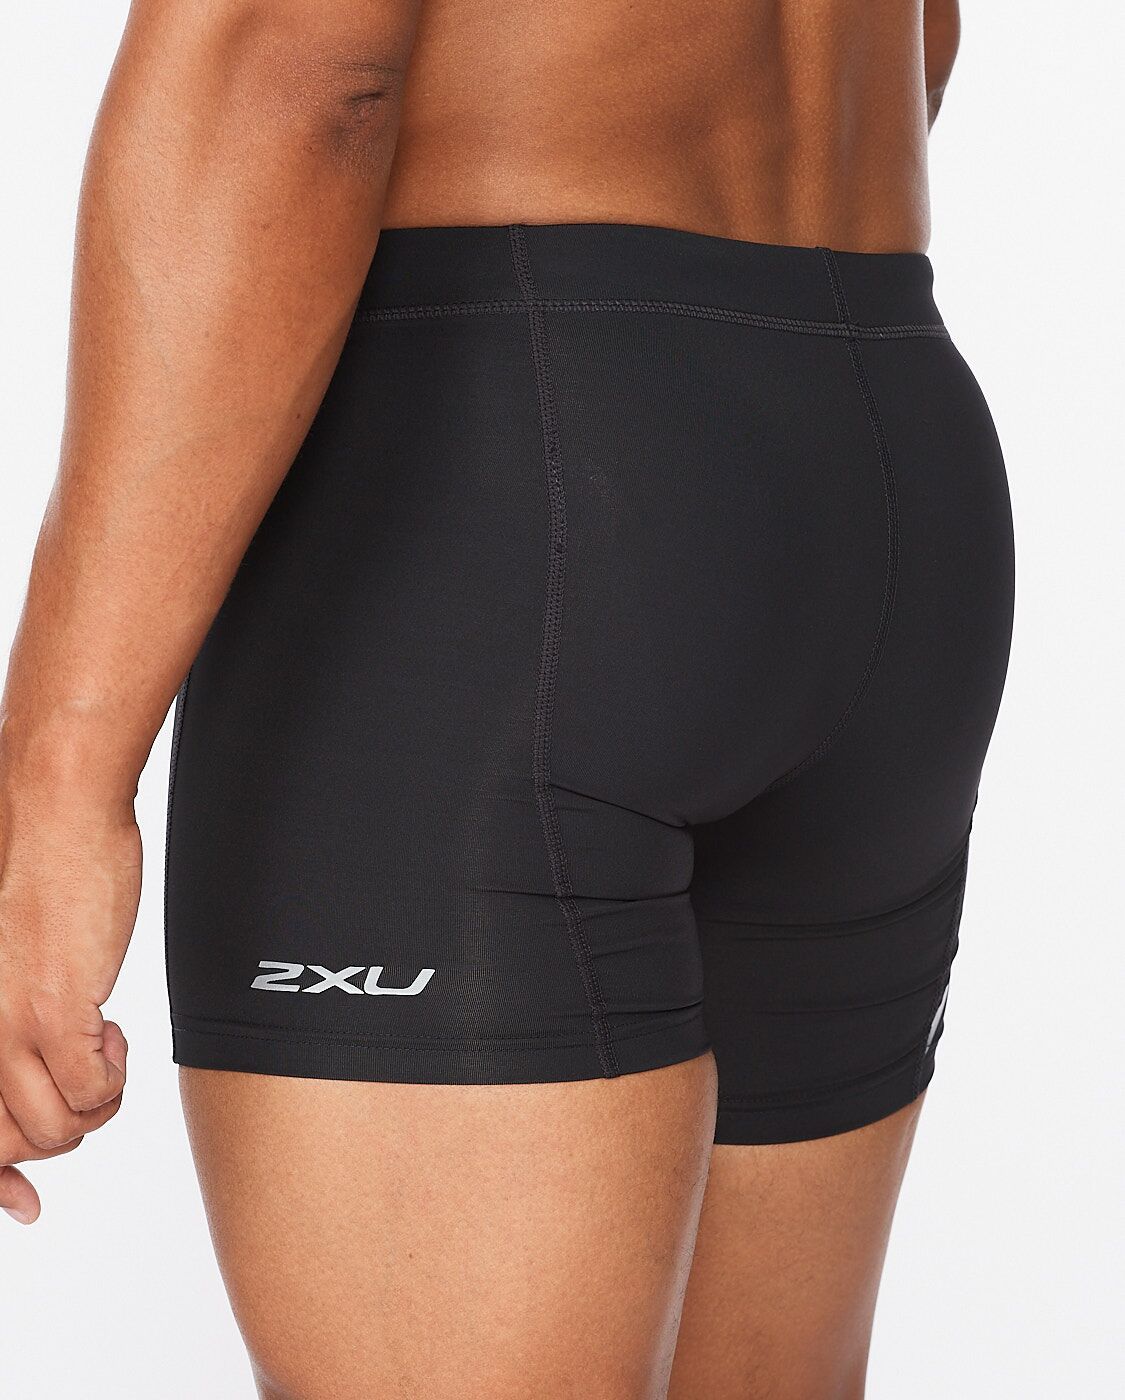 2XU South Africa - Men's Core Compression 1/2 Shorts - Black/Silver